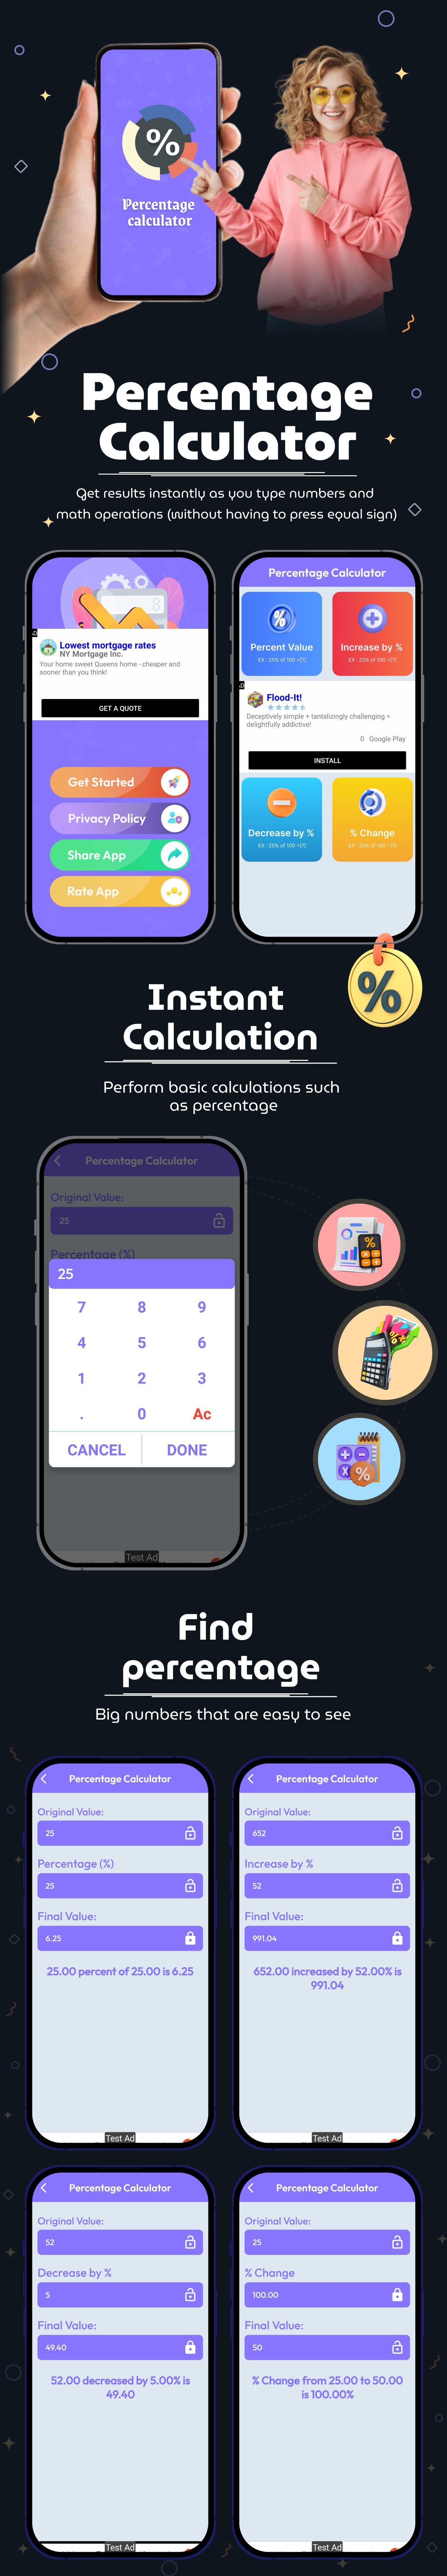 Percentage Calculator| Quick Percentage Calculator | Android Full App Code | Admob Ads - 1